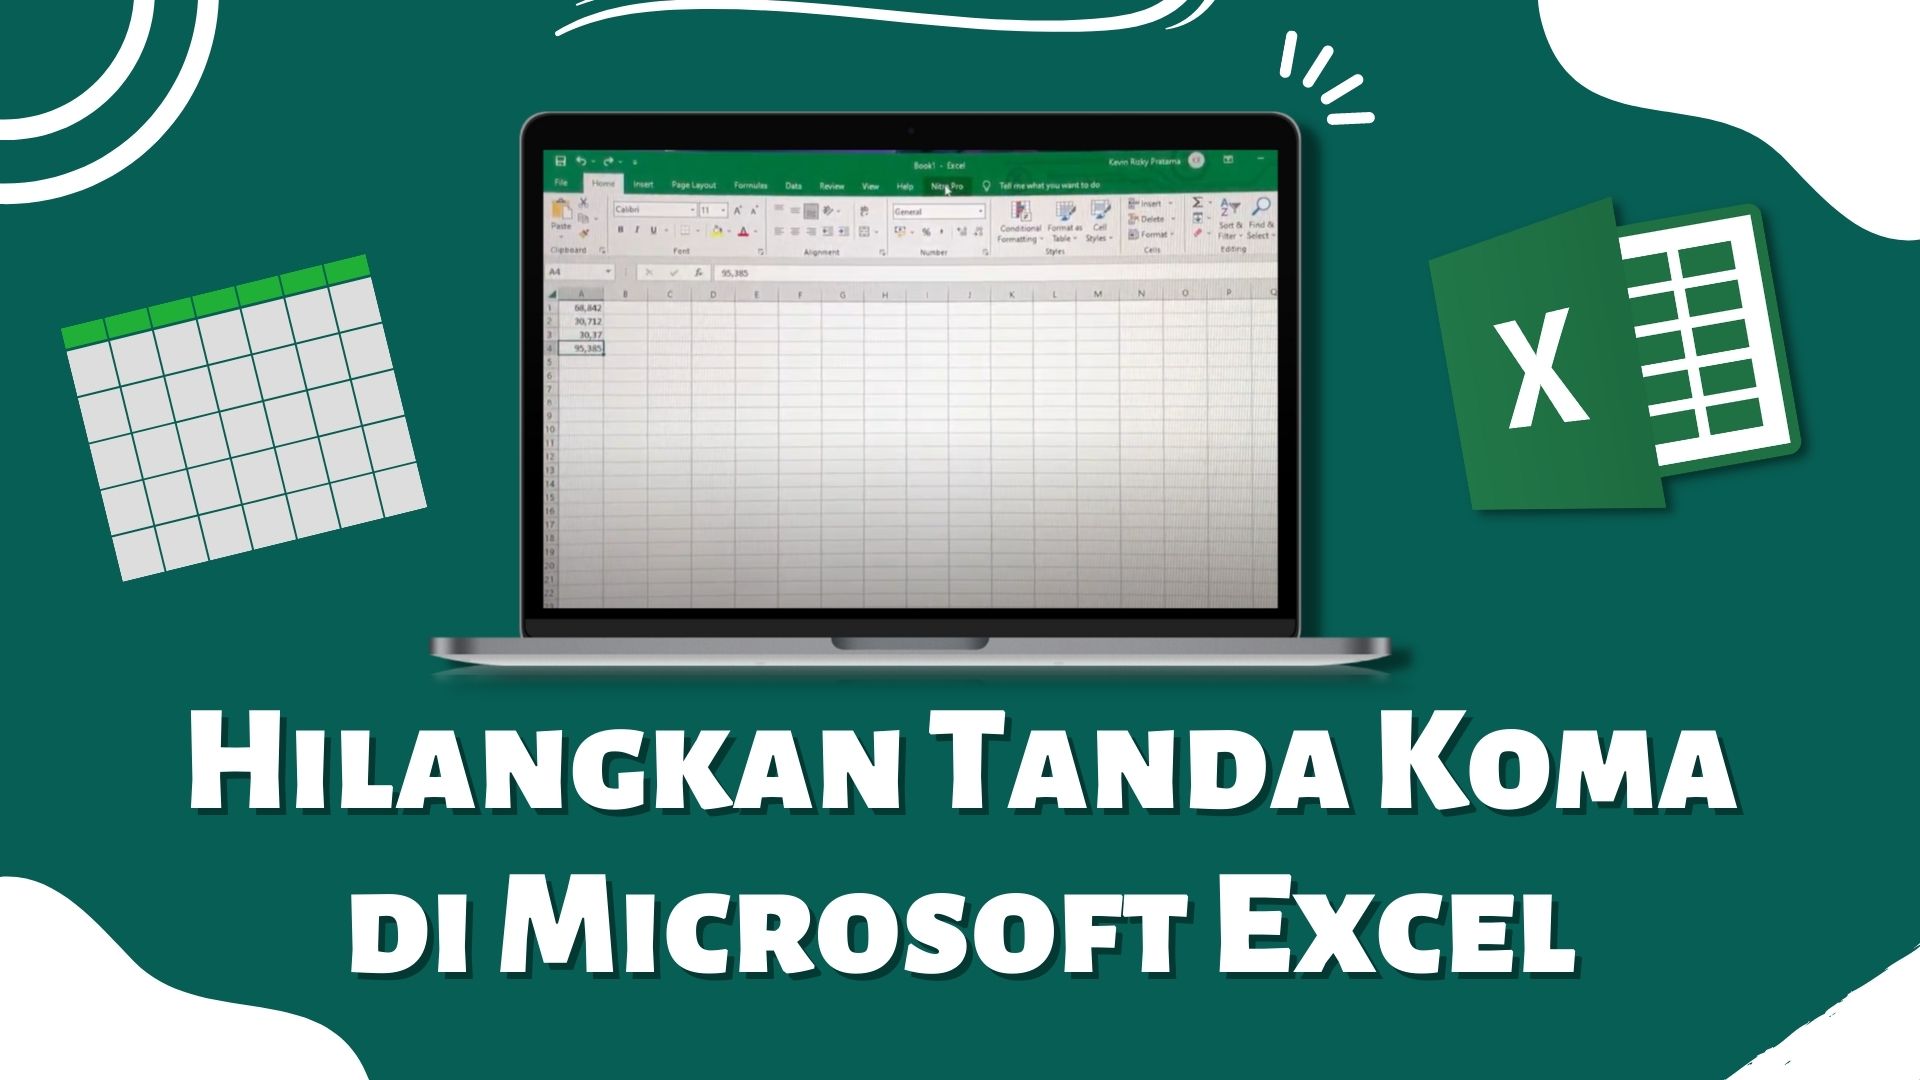 Cara Menghilangkan Tanda Koma di Microsoft Excel